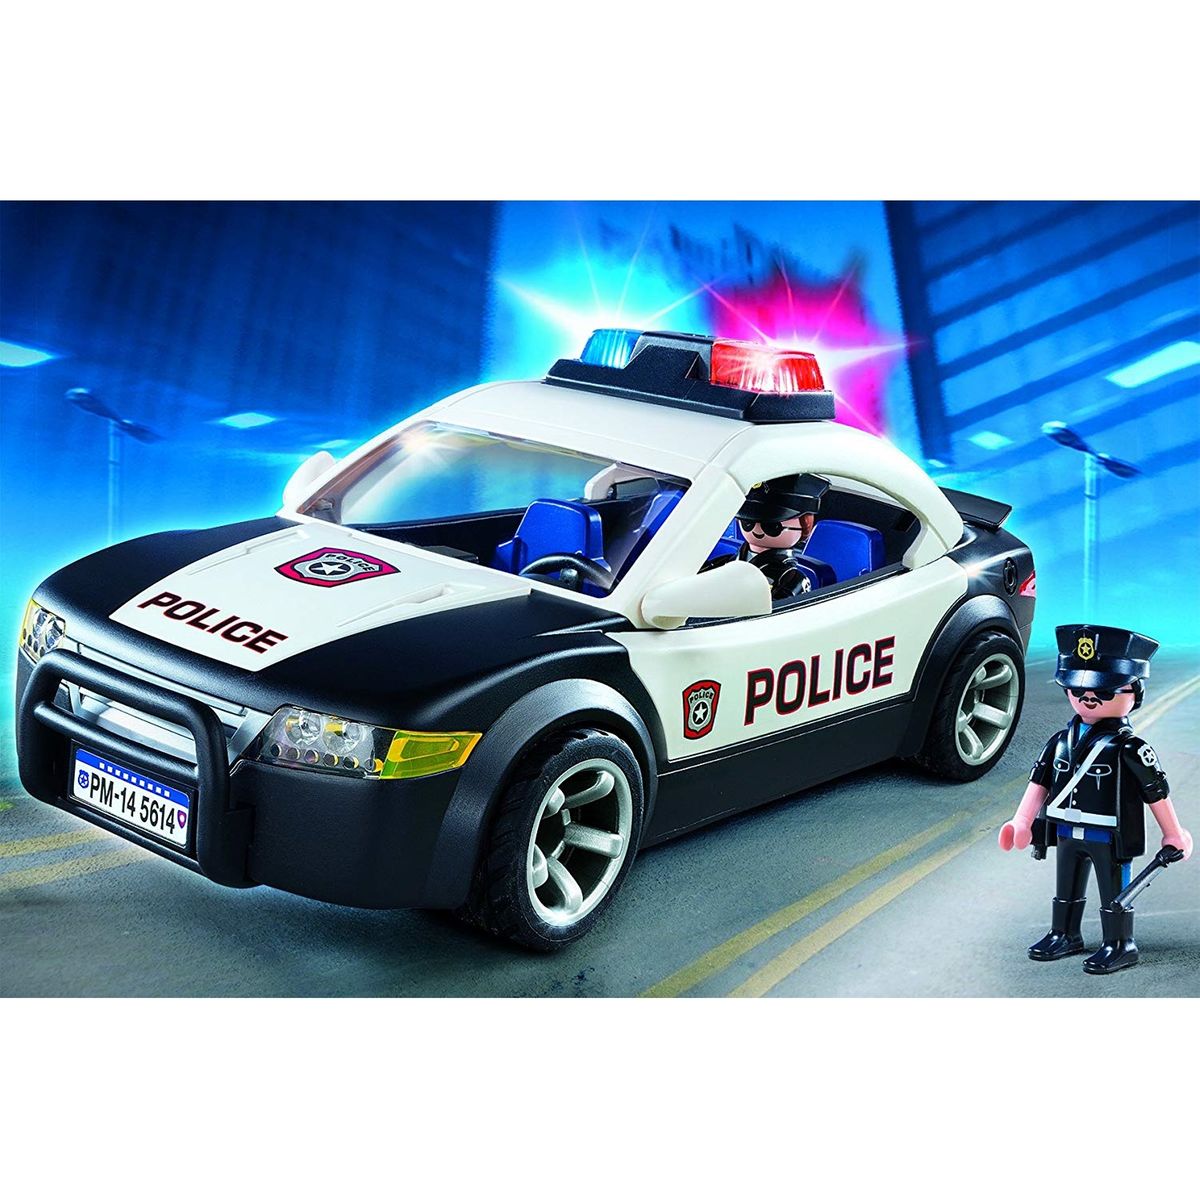 City action - voiture de police Playmobil